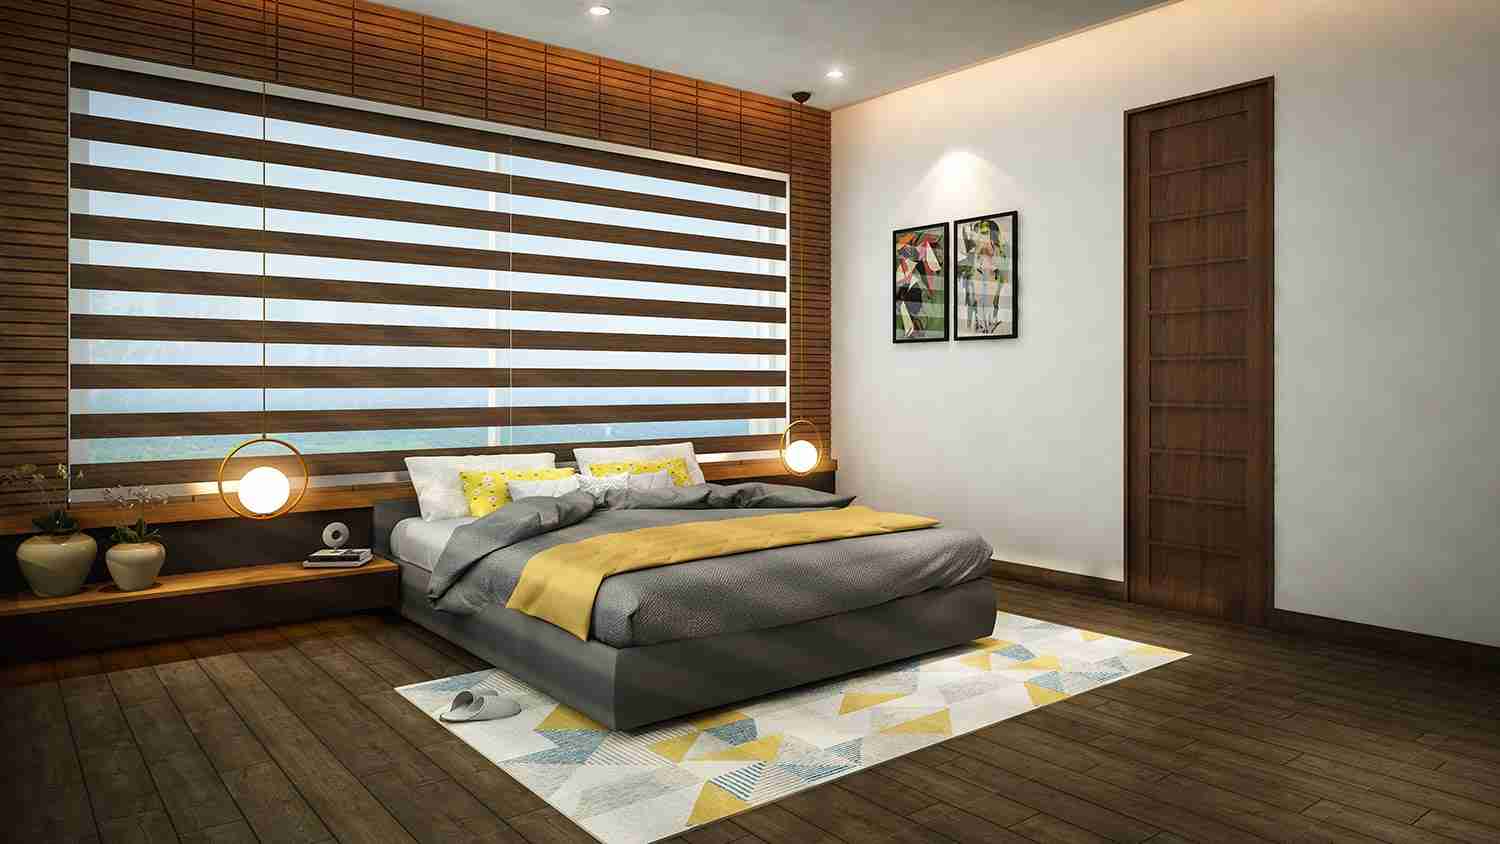 Villas in thrissur - Master bed room